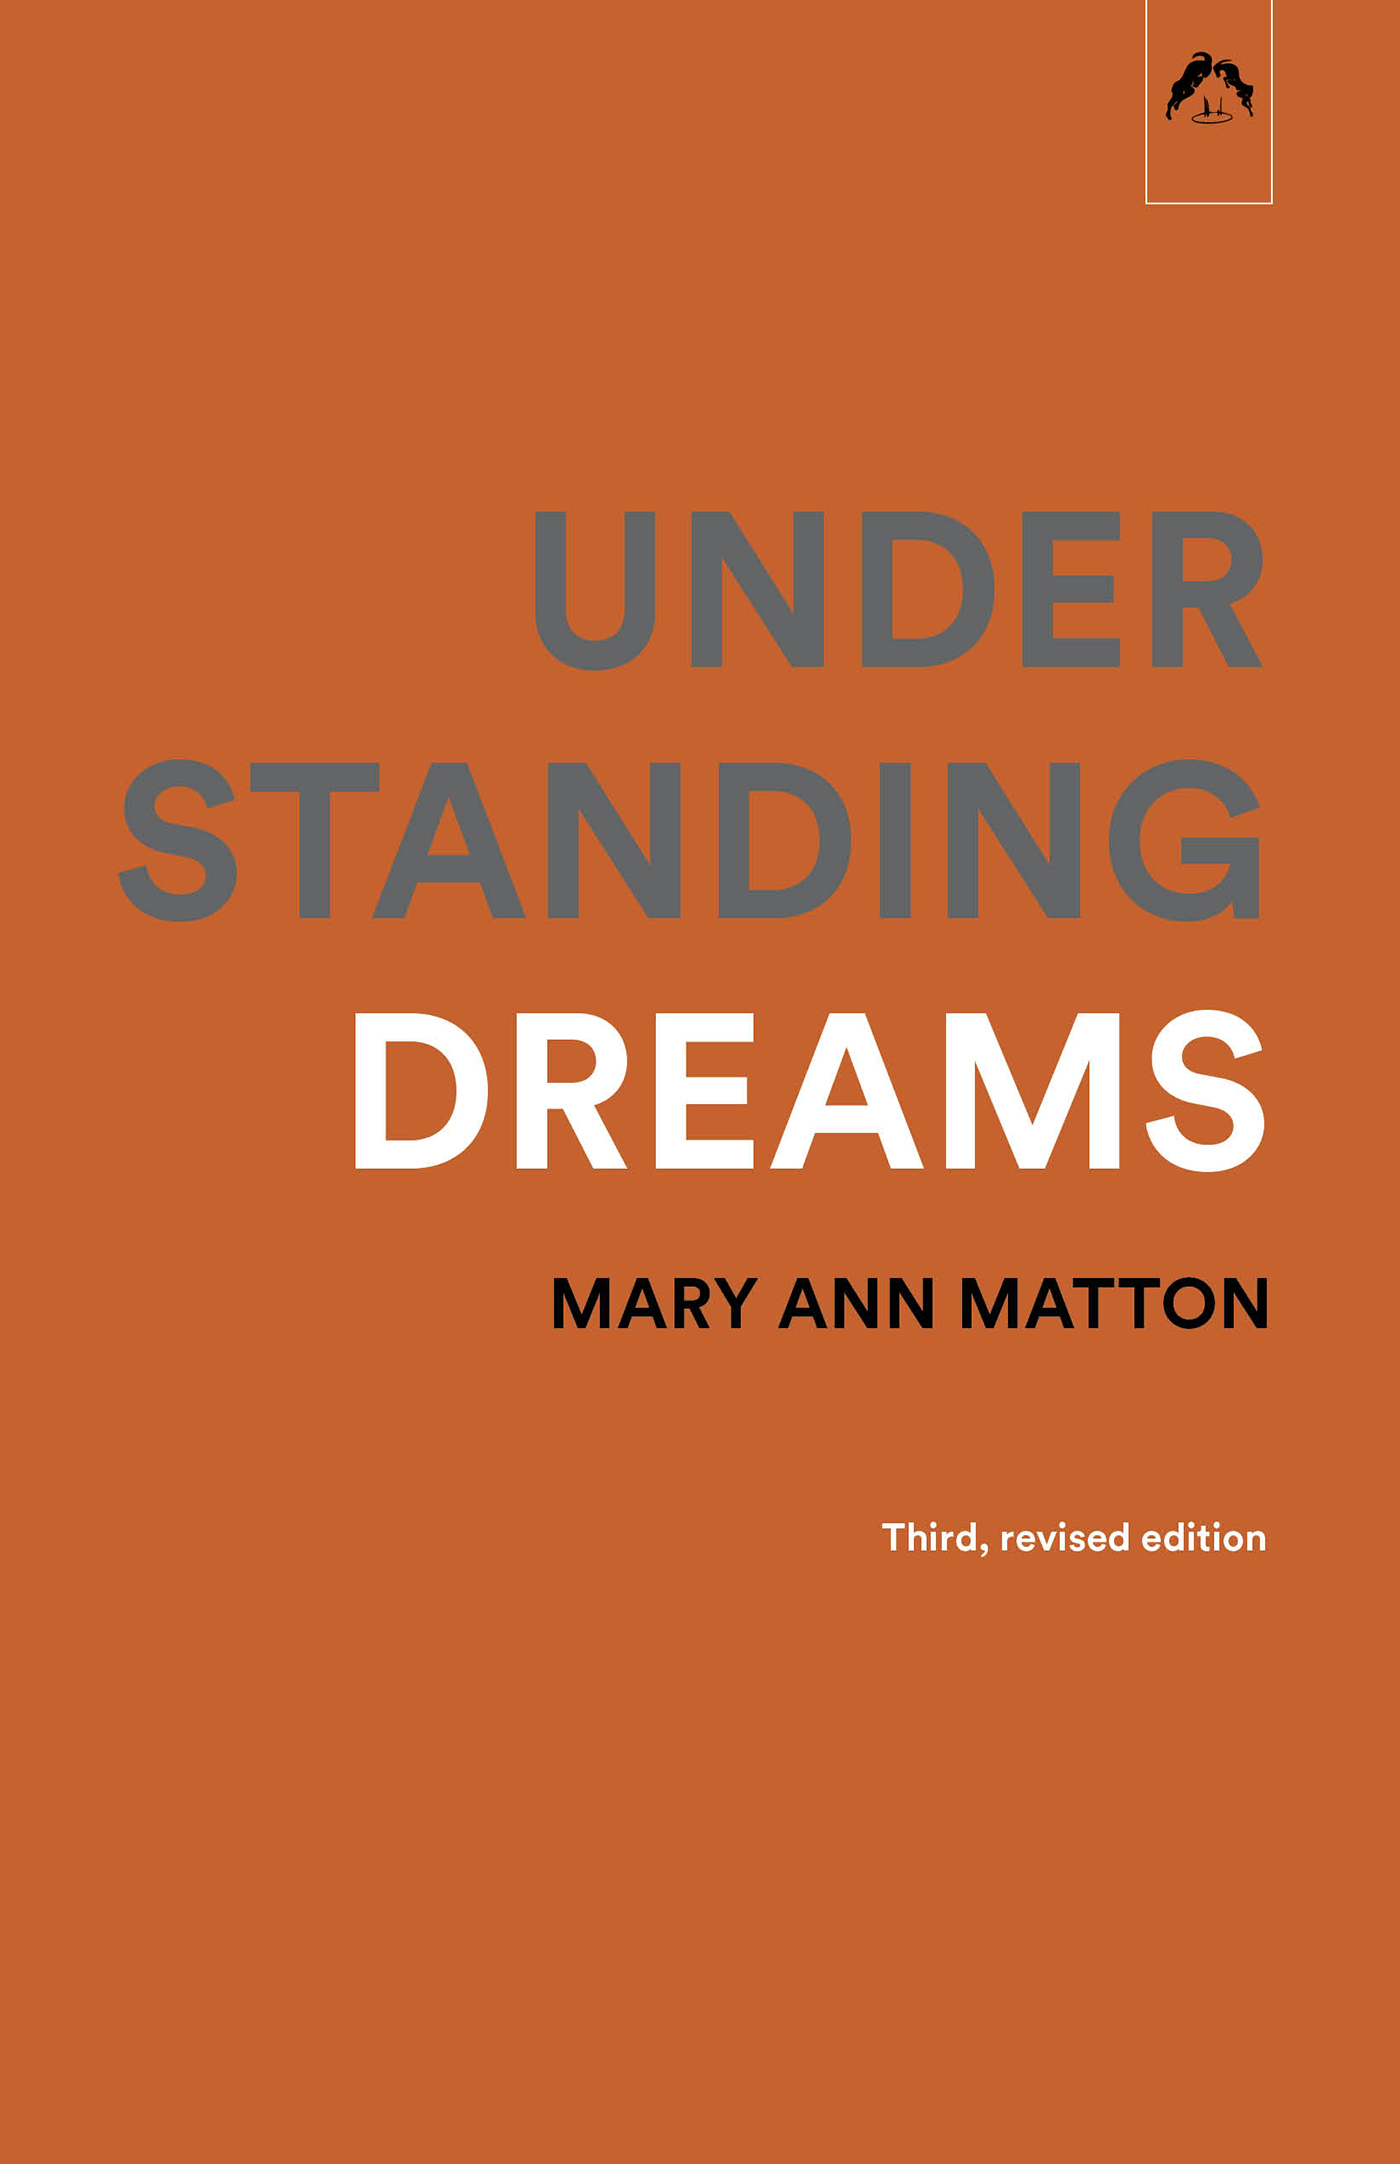 Mattoon: Understanding Dreams